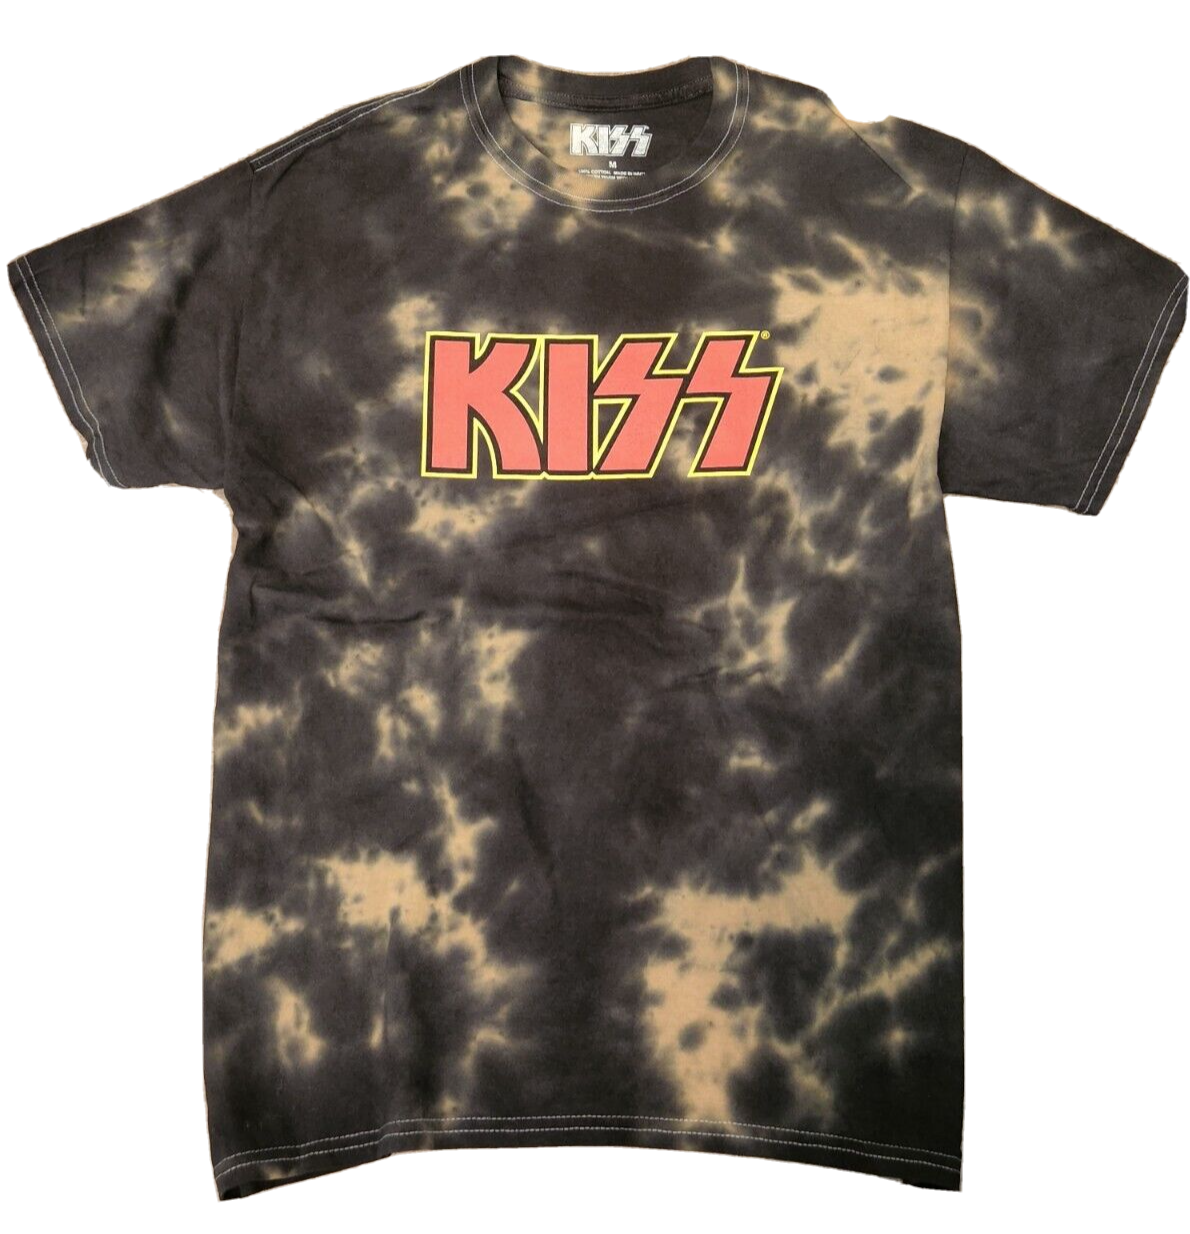 Kiss Tie-Dye Band T-Shirt - Black with Gold Dye - Men's/Unisex Classic Fit